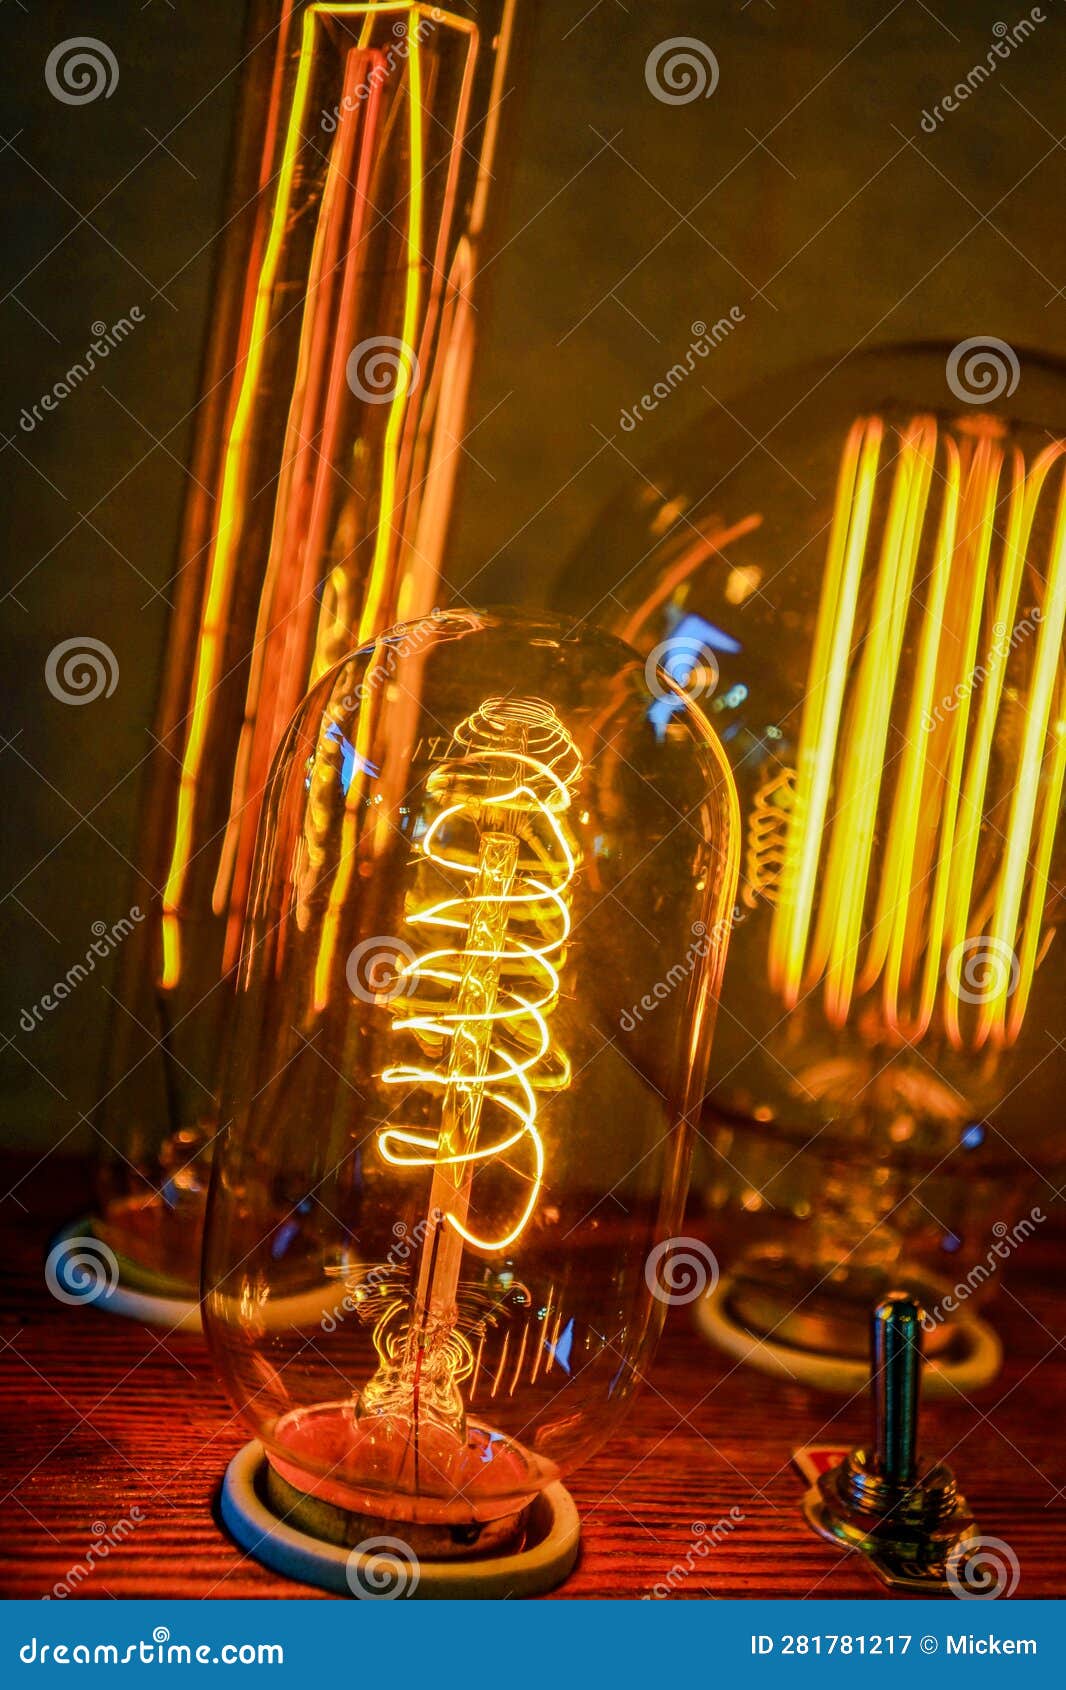 light bulb glass filaments